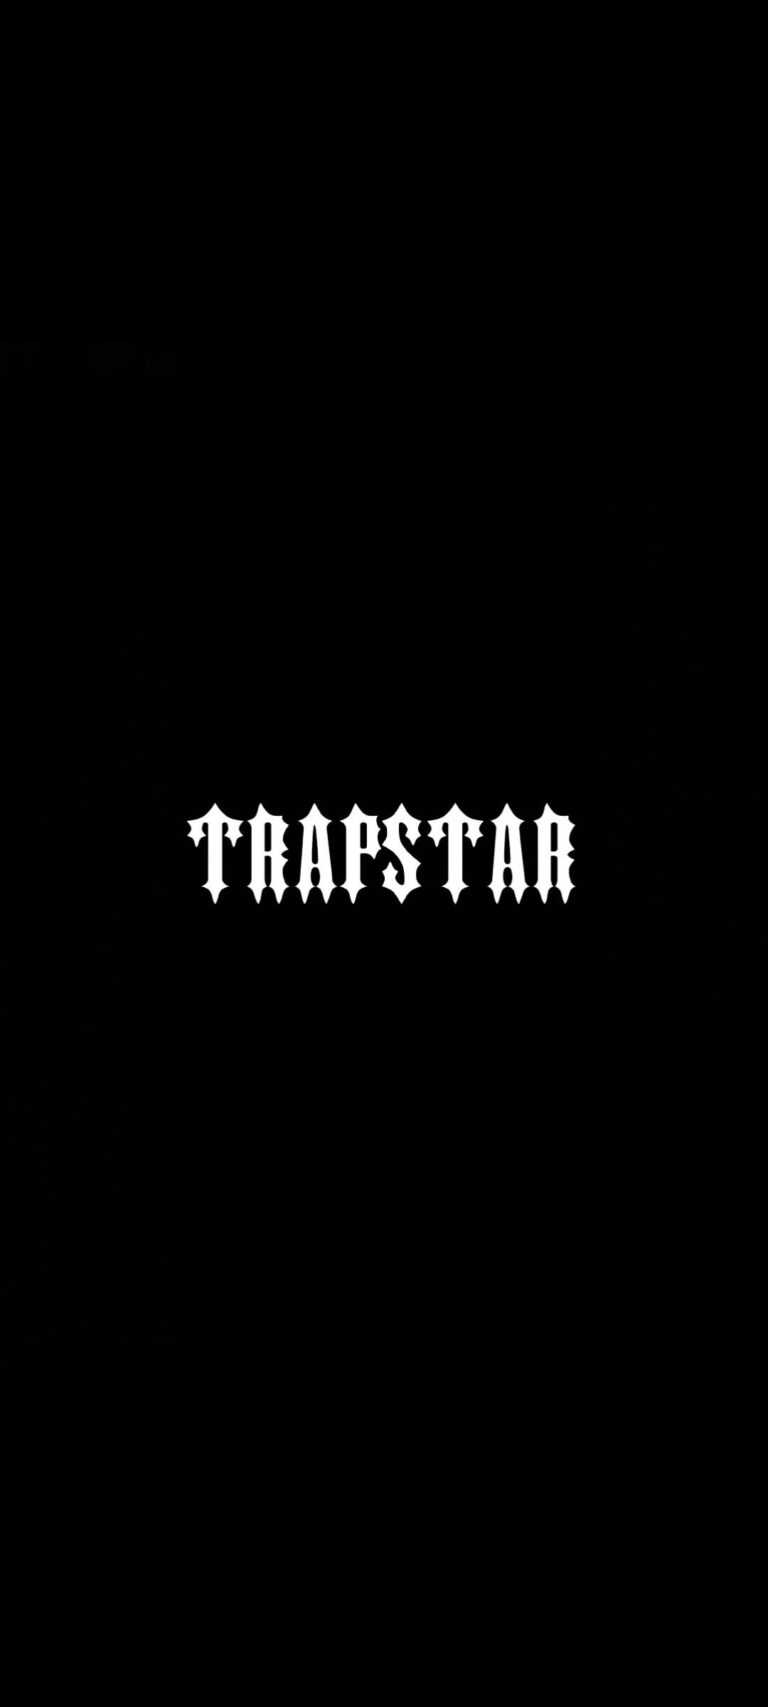 Trapstar Wallpaper - IXpaper